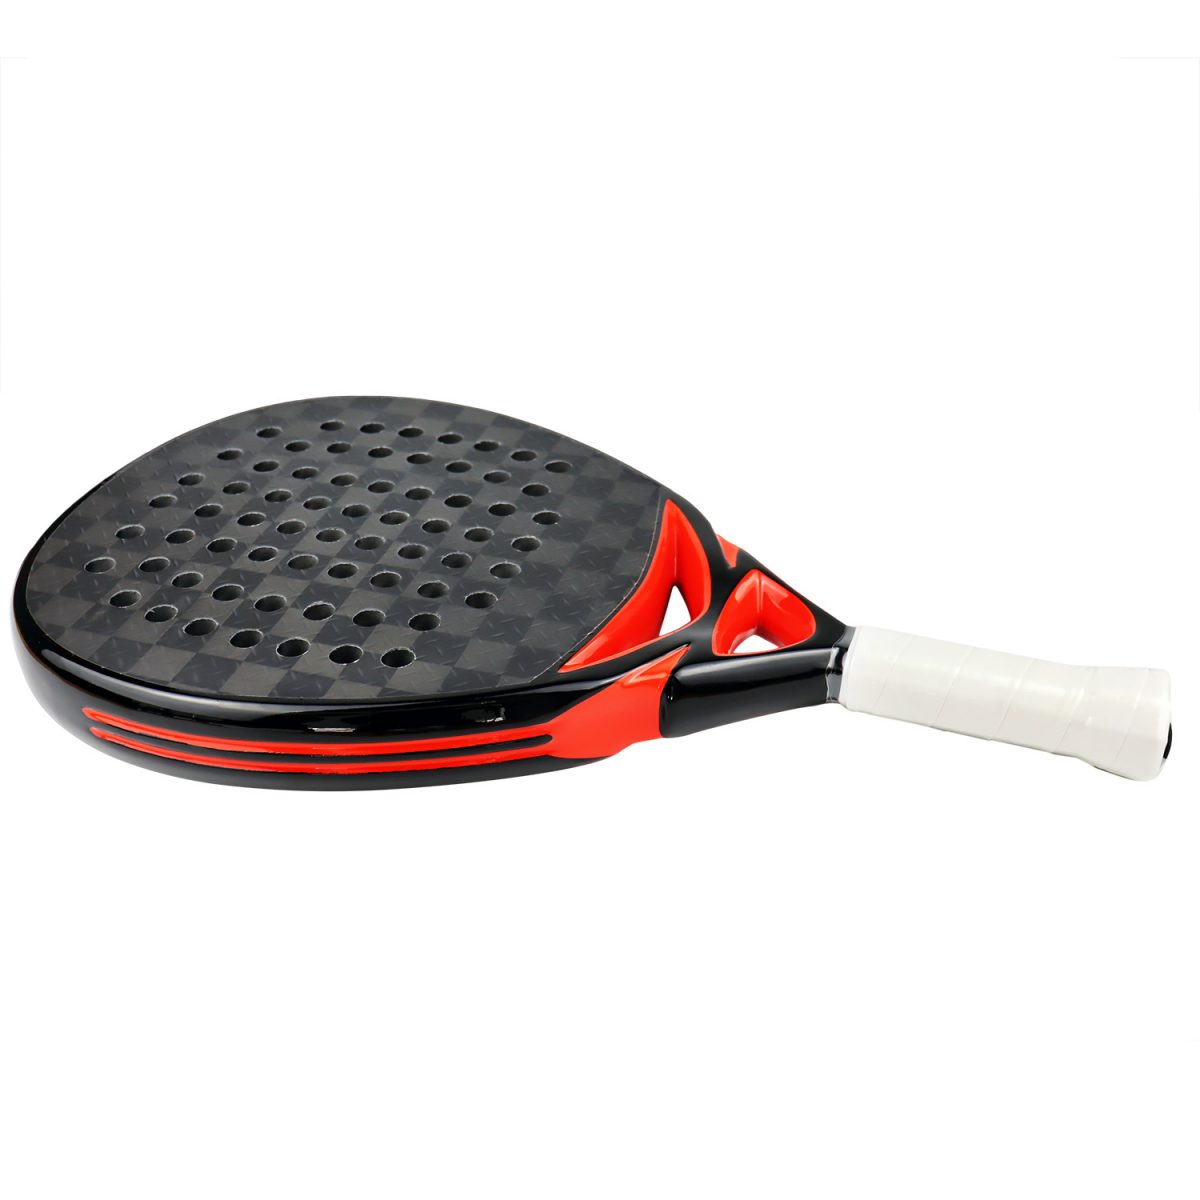 AMA SPORT 18K Carbon Tennis Padle Paddle Racket 3D Rough Surface High Quality EVA Soft 38mm